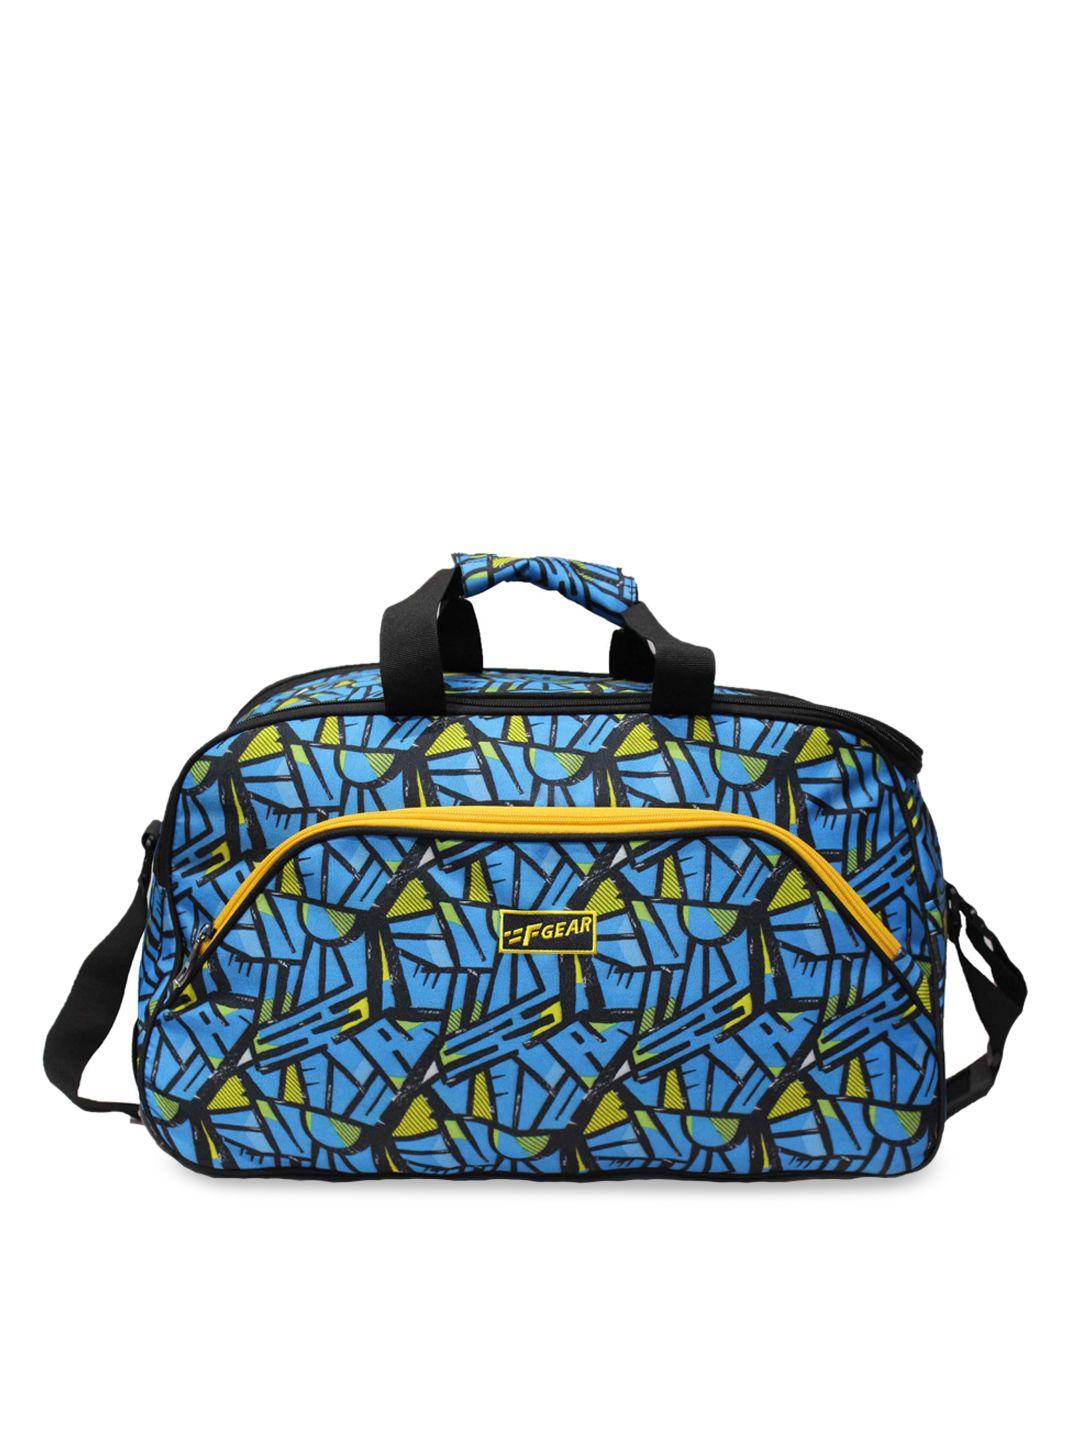 f gear unisex blue & yellow cooter travel trolley duffel bag